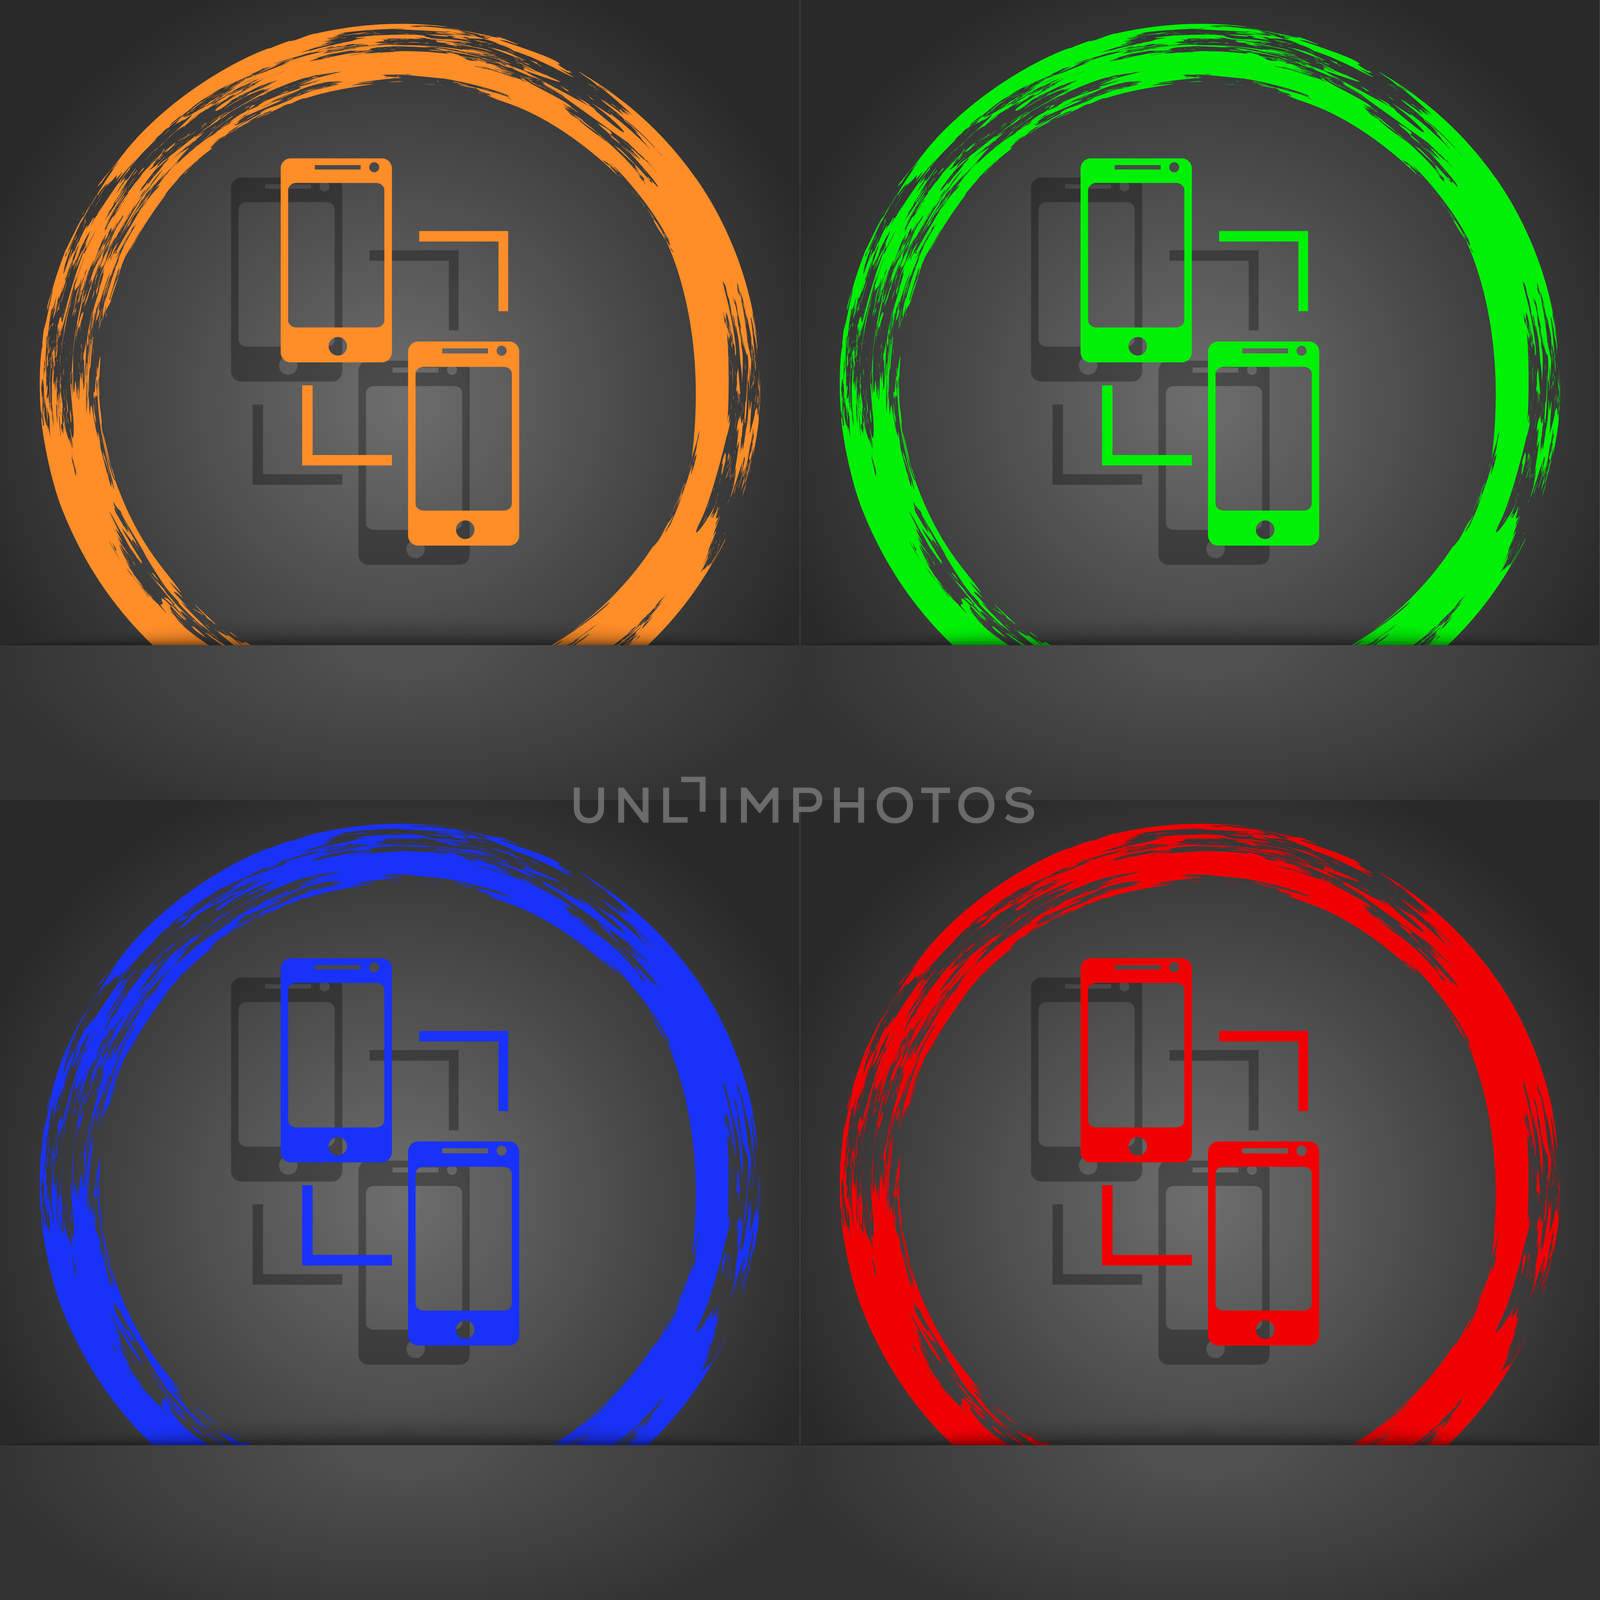 Synchronization sign icon. communicators sync symbol. Data exchange. Fashionable modern style. In the orange, green, blue, red design. illustration